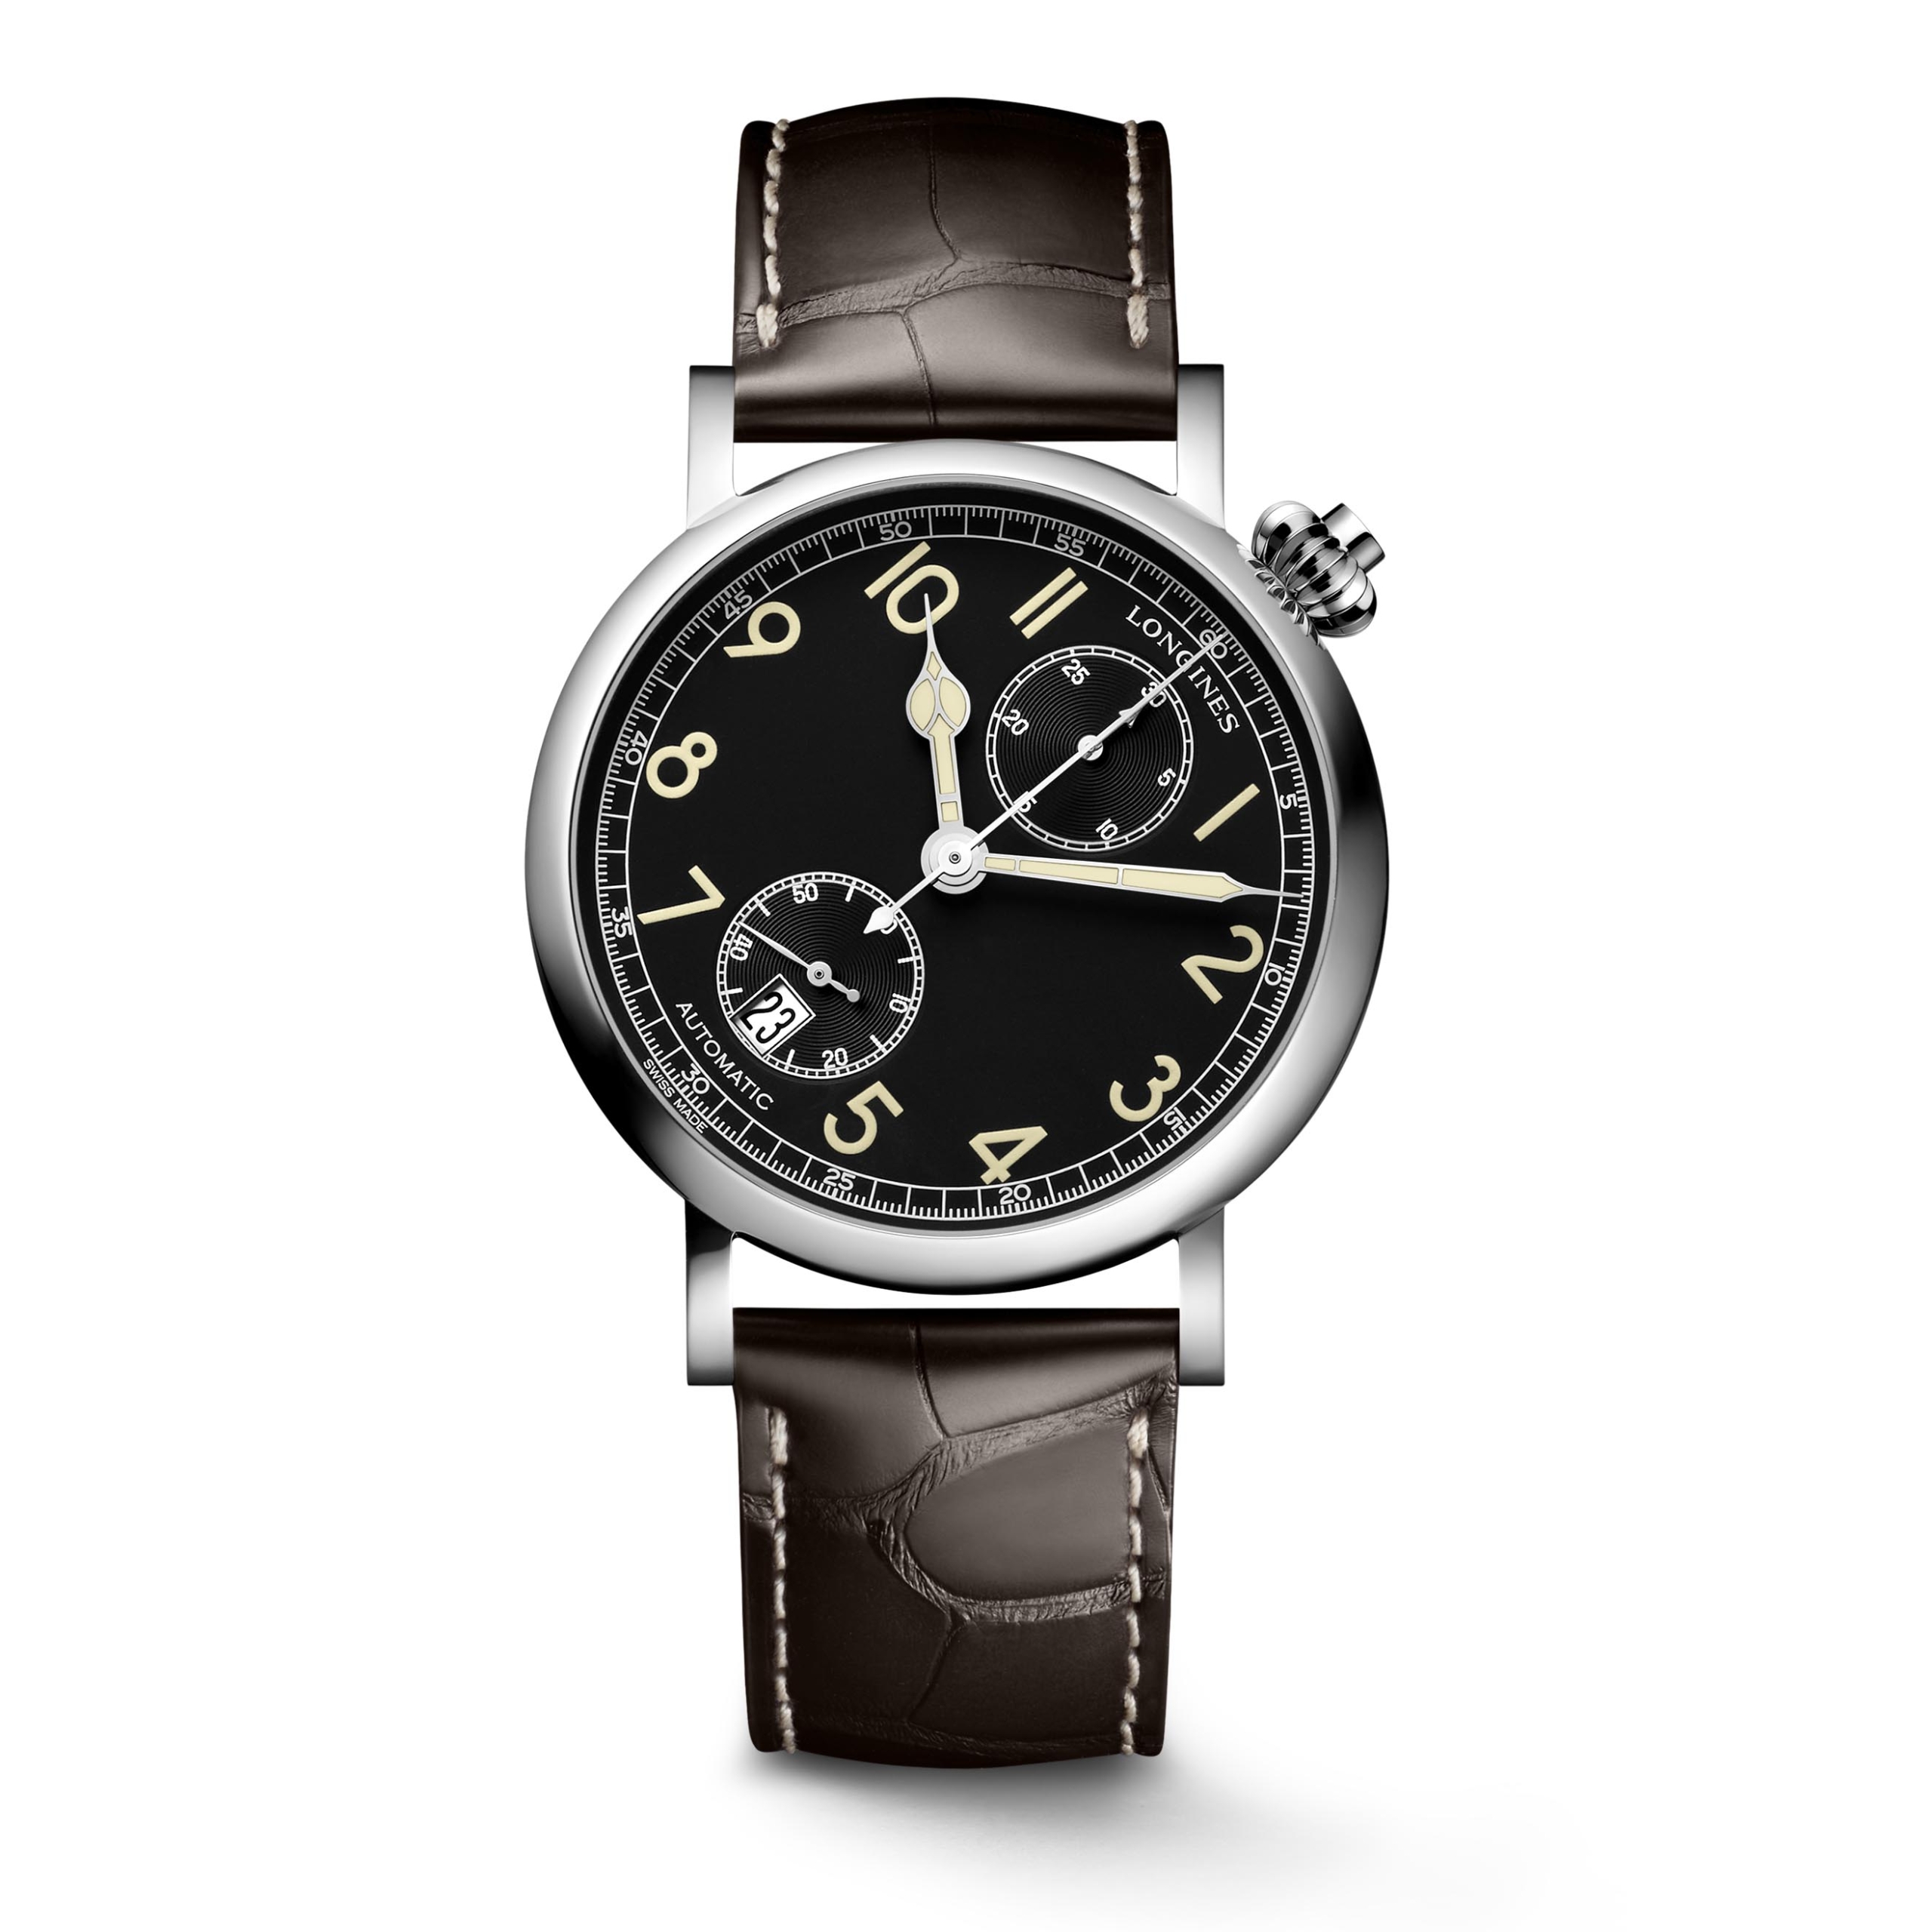 Longines Avigation Watch Type A-7 1935